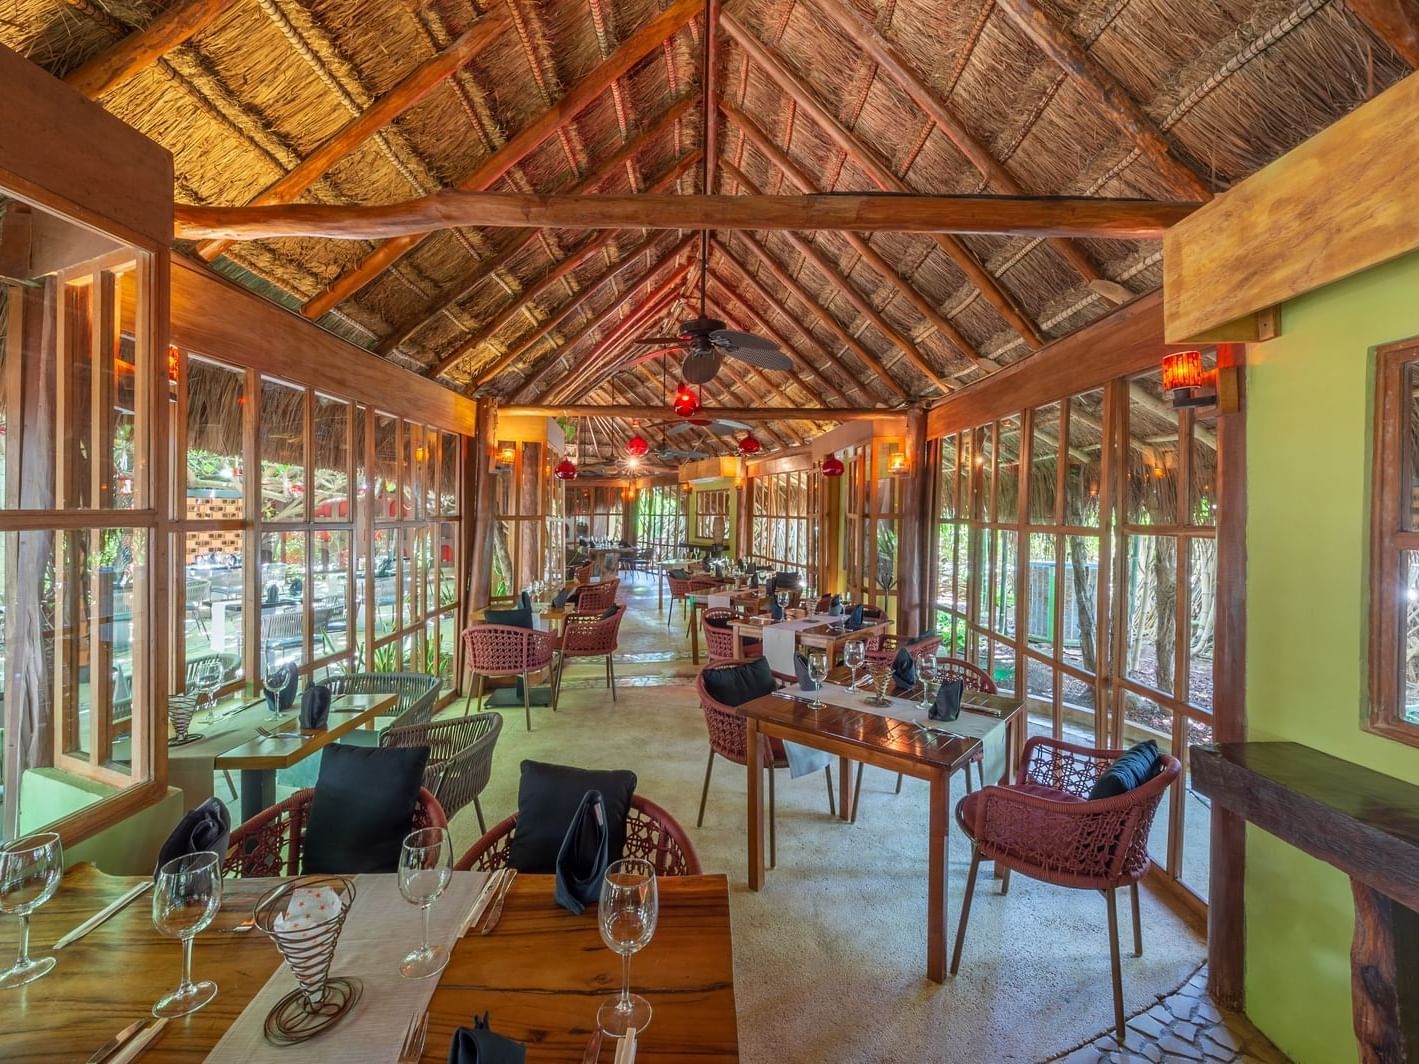 Dining area of hidden garden restaurant at La Coleccion resorts